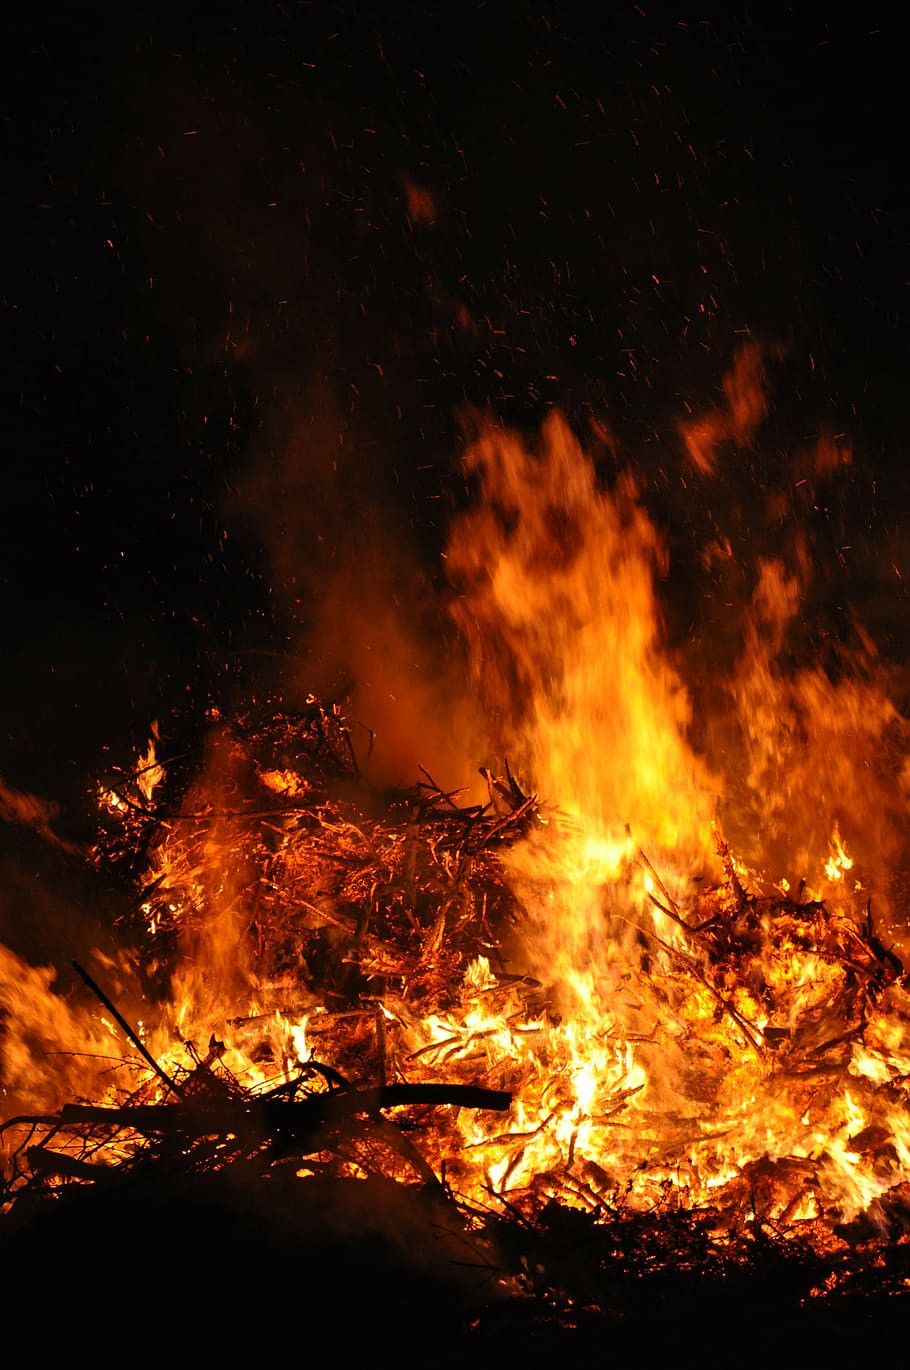 fogo da páscoa, noite, chama, fogo, queima, fogo - fenômeno natural, calor - temperatura, fogueira, movimento, cor laranja